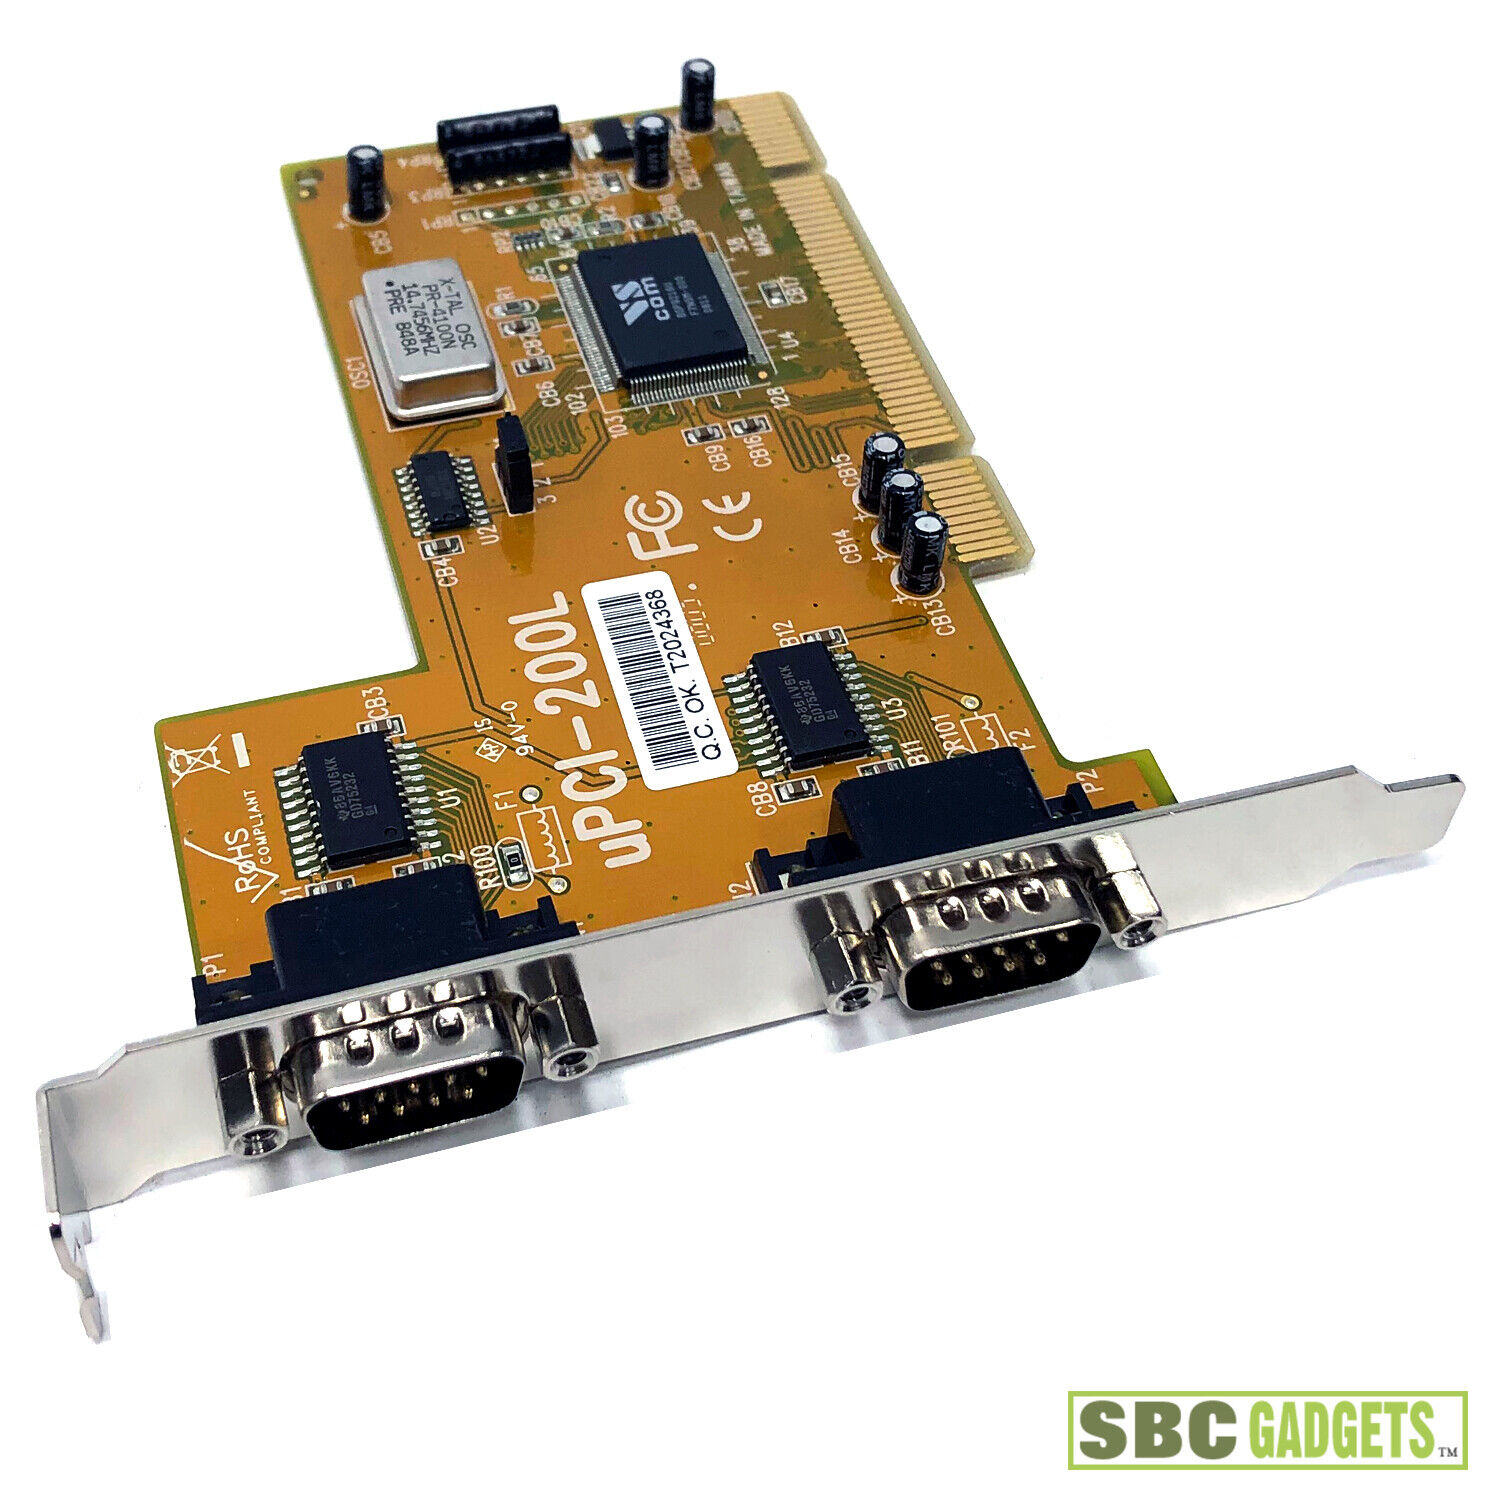 VScom UPCI-200L 2x RS-232 Dual Port PCI to Serial Card